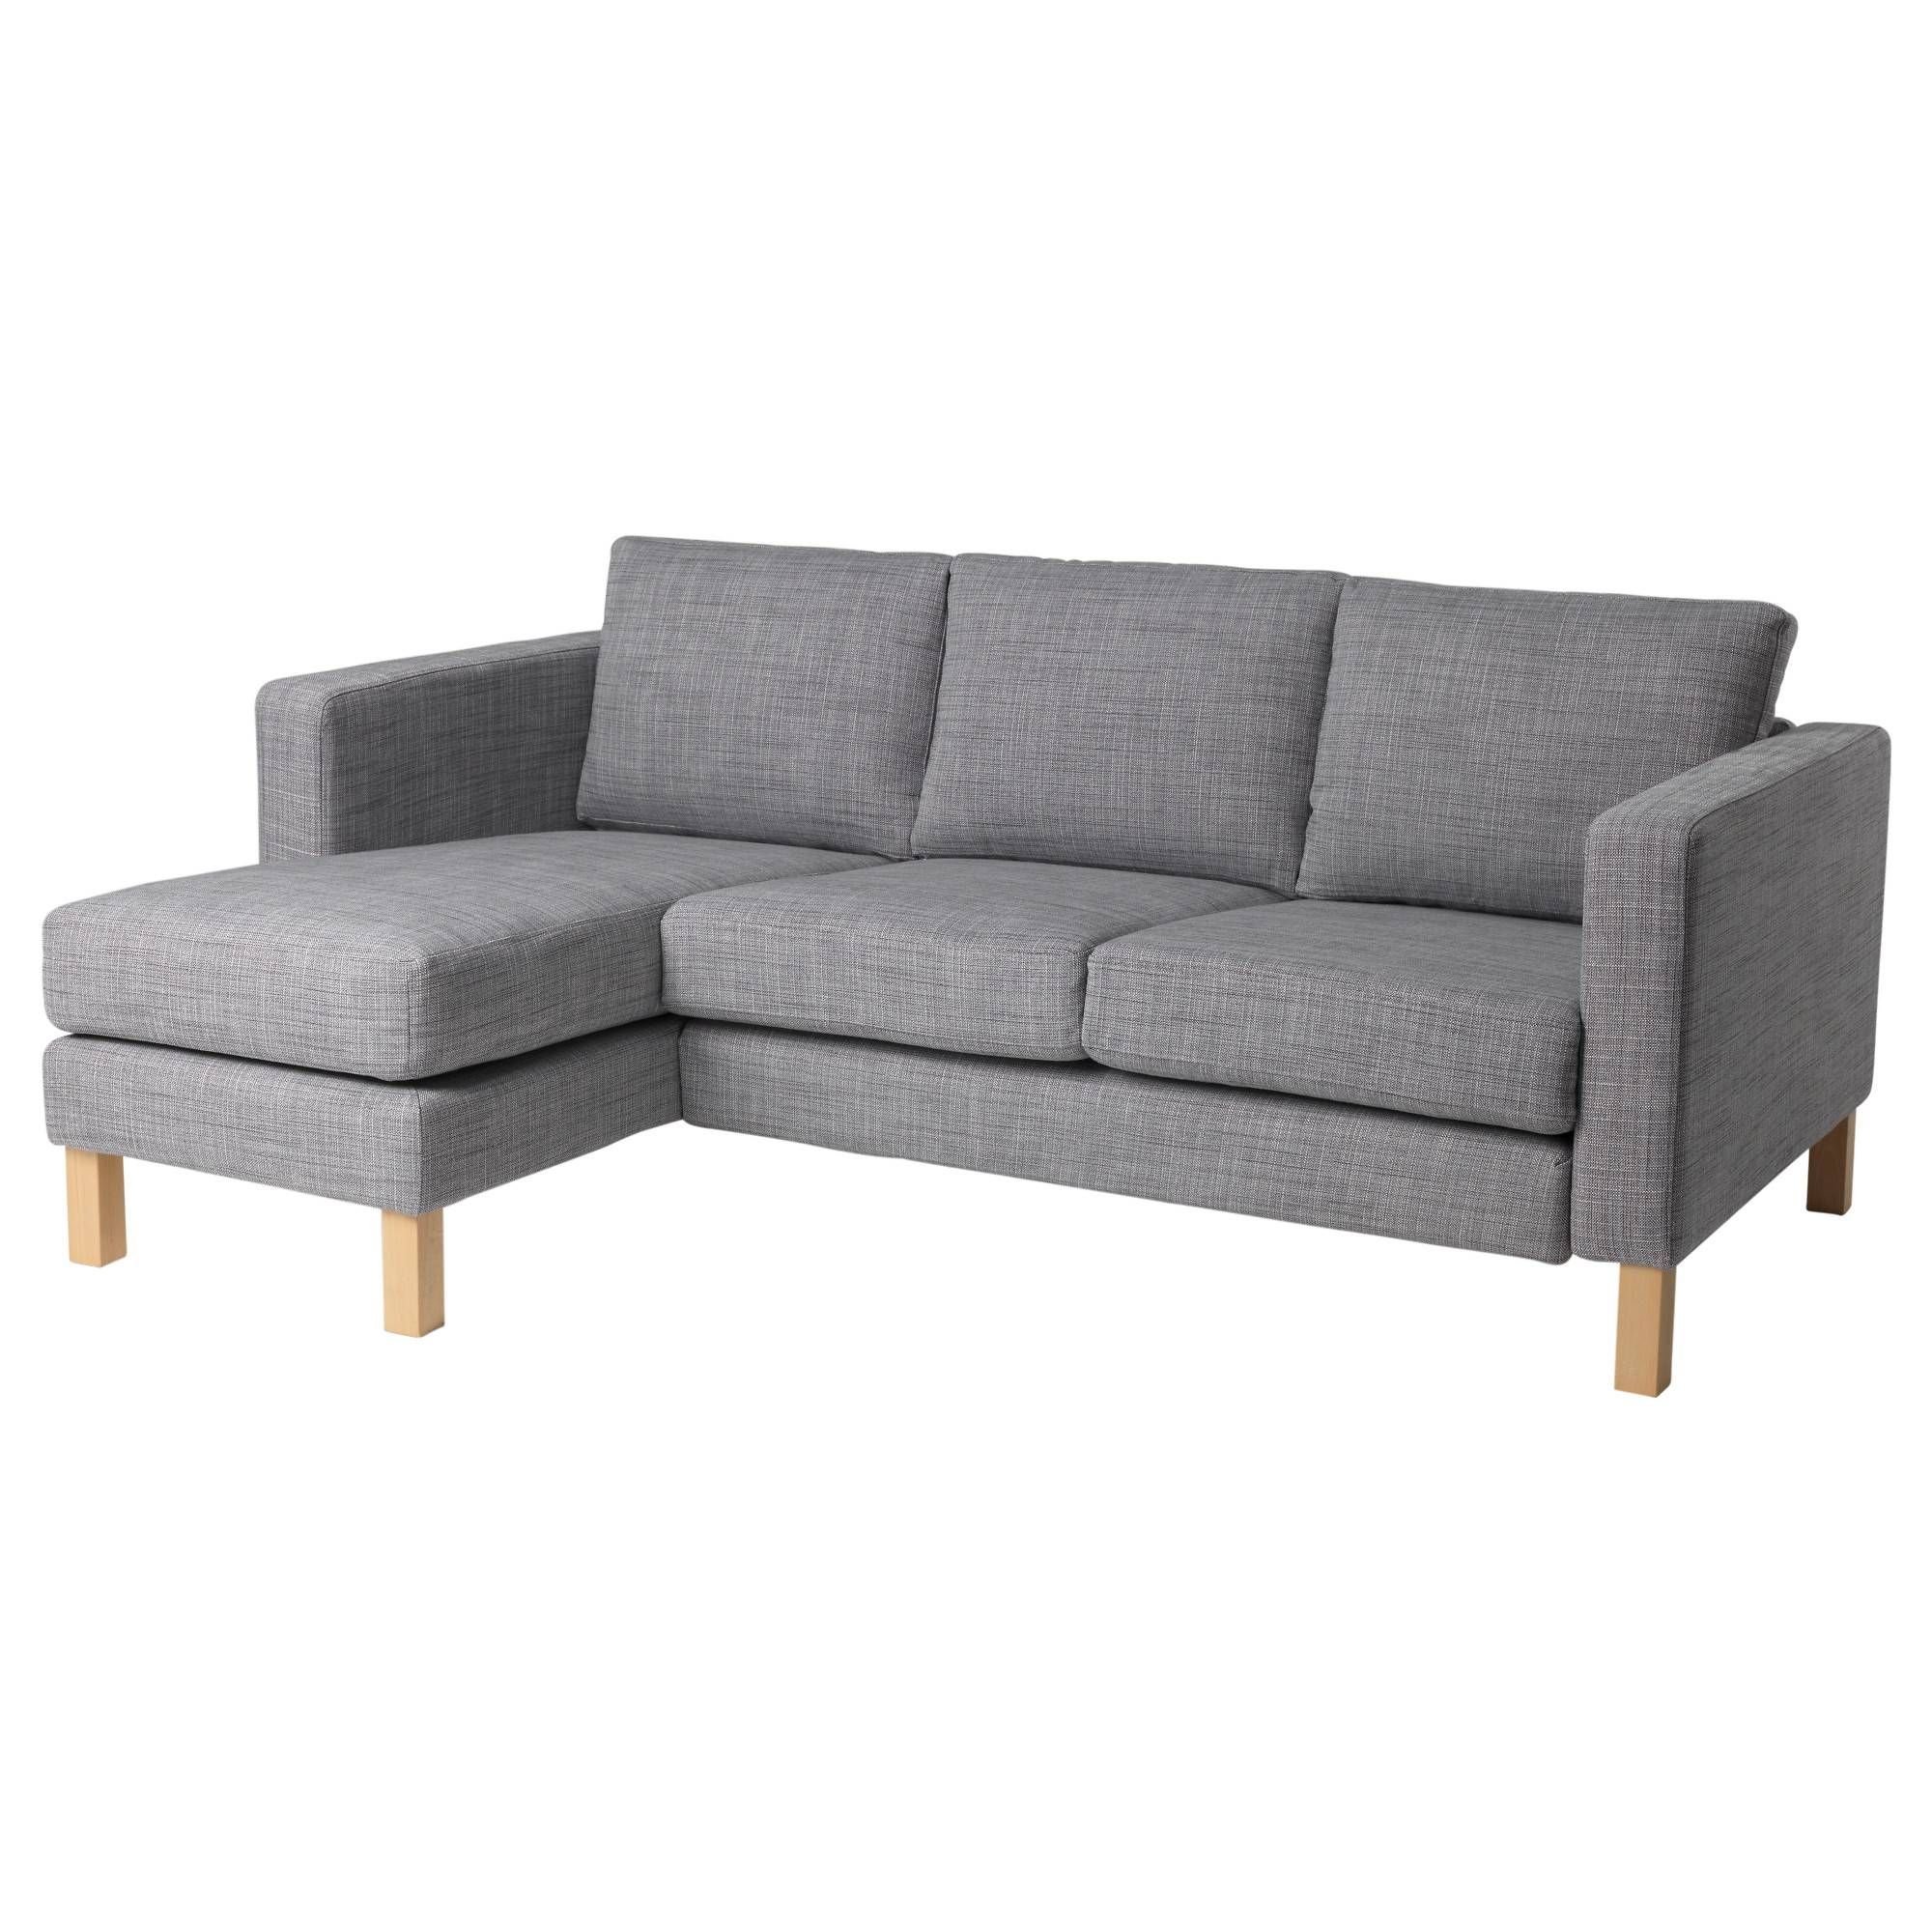 Karlstad Compact 2 Seat Sofa W Chaise Lounge – Isunda Grey – Ikea With Ikea Chaise Lounge Sofa (Photo 17 of 30)